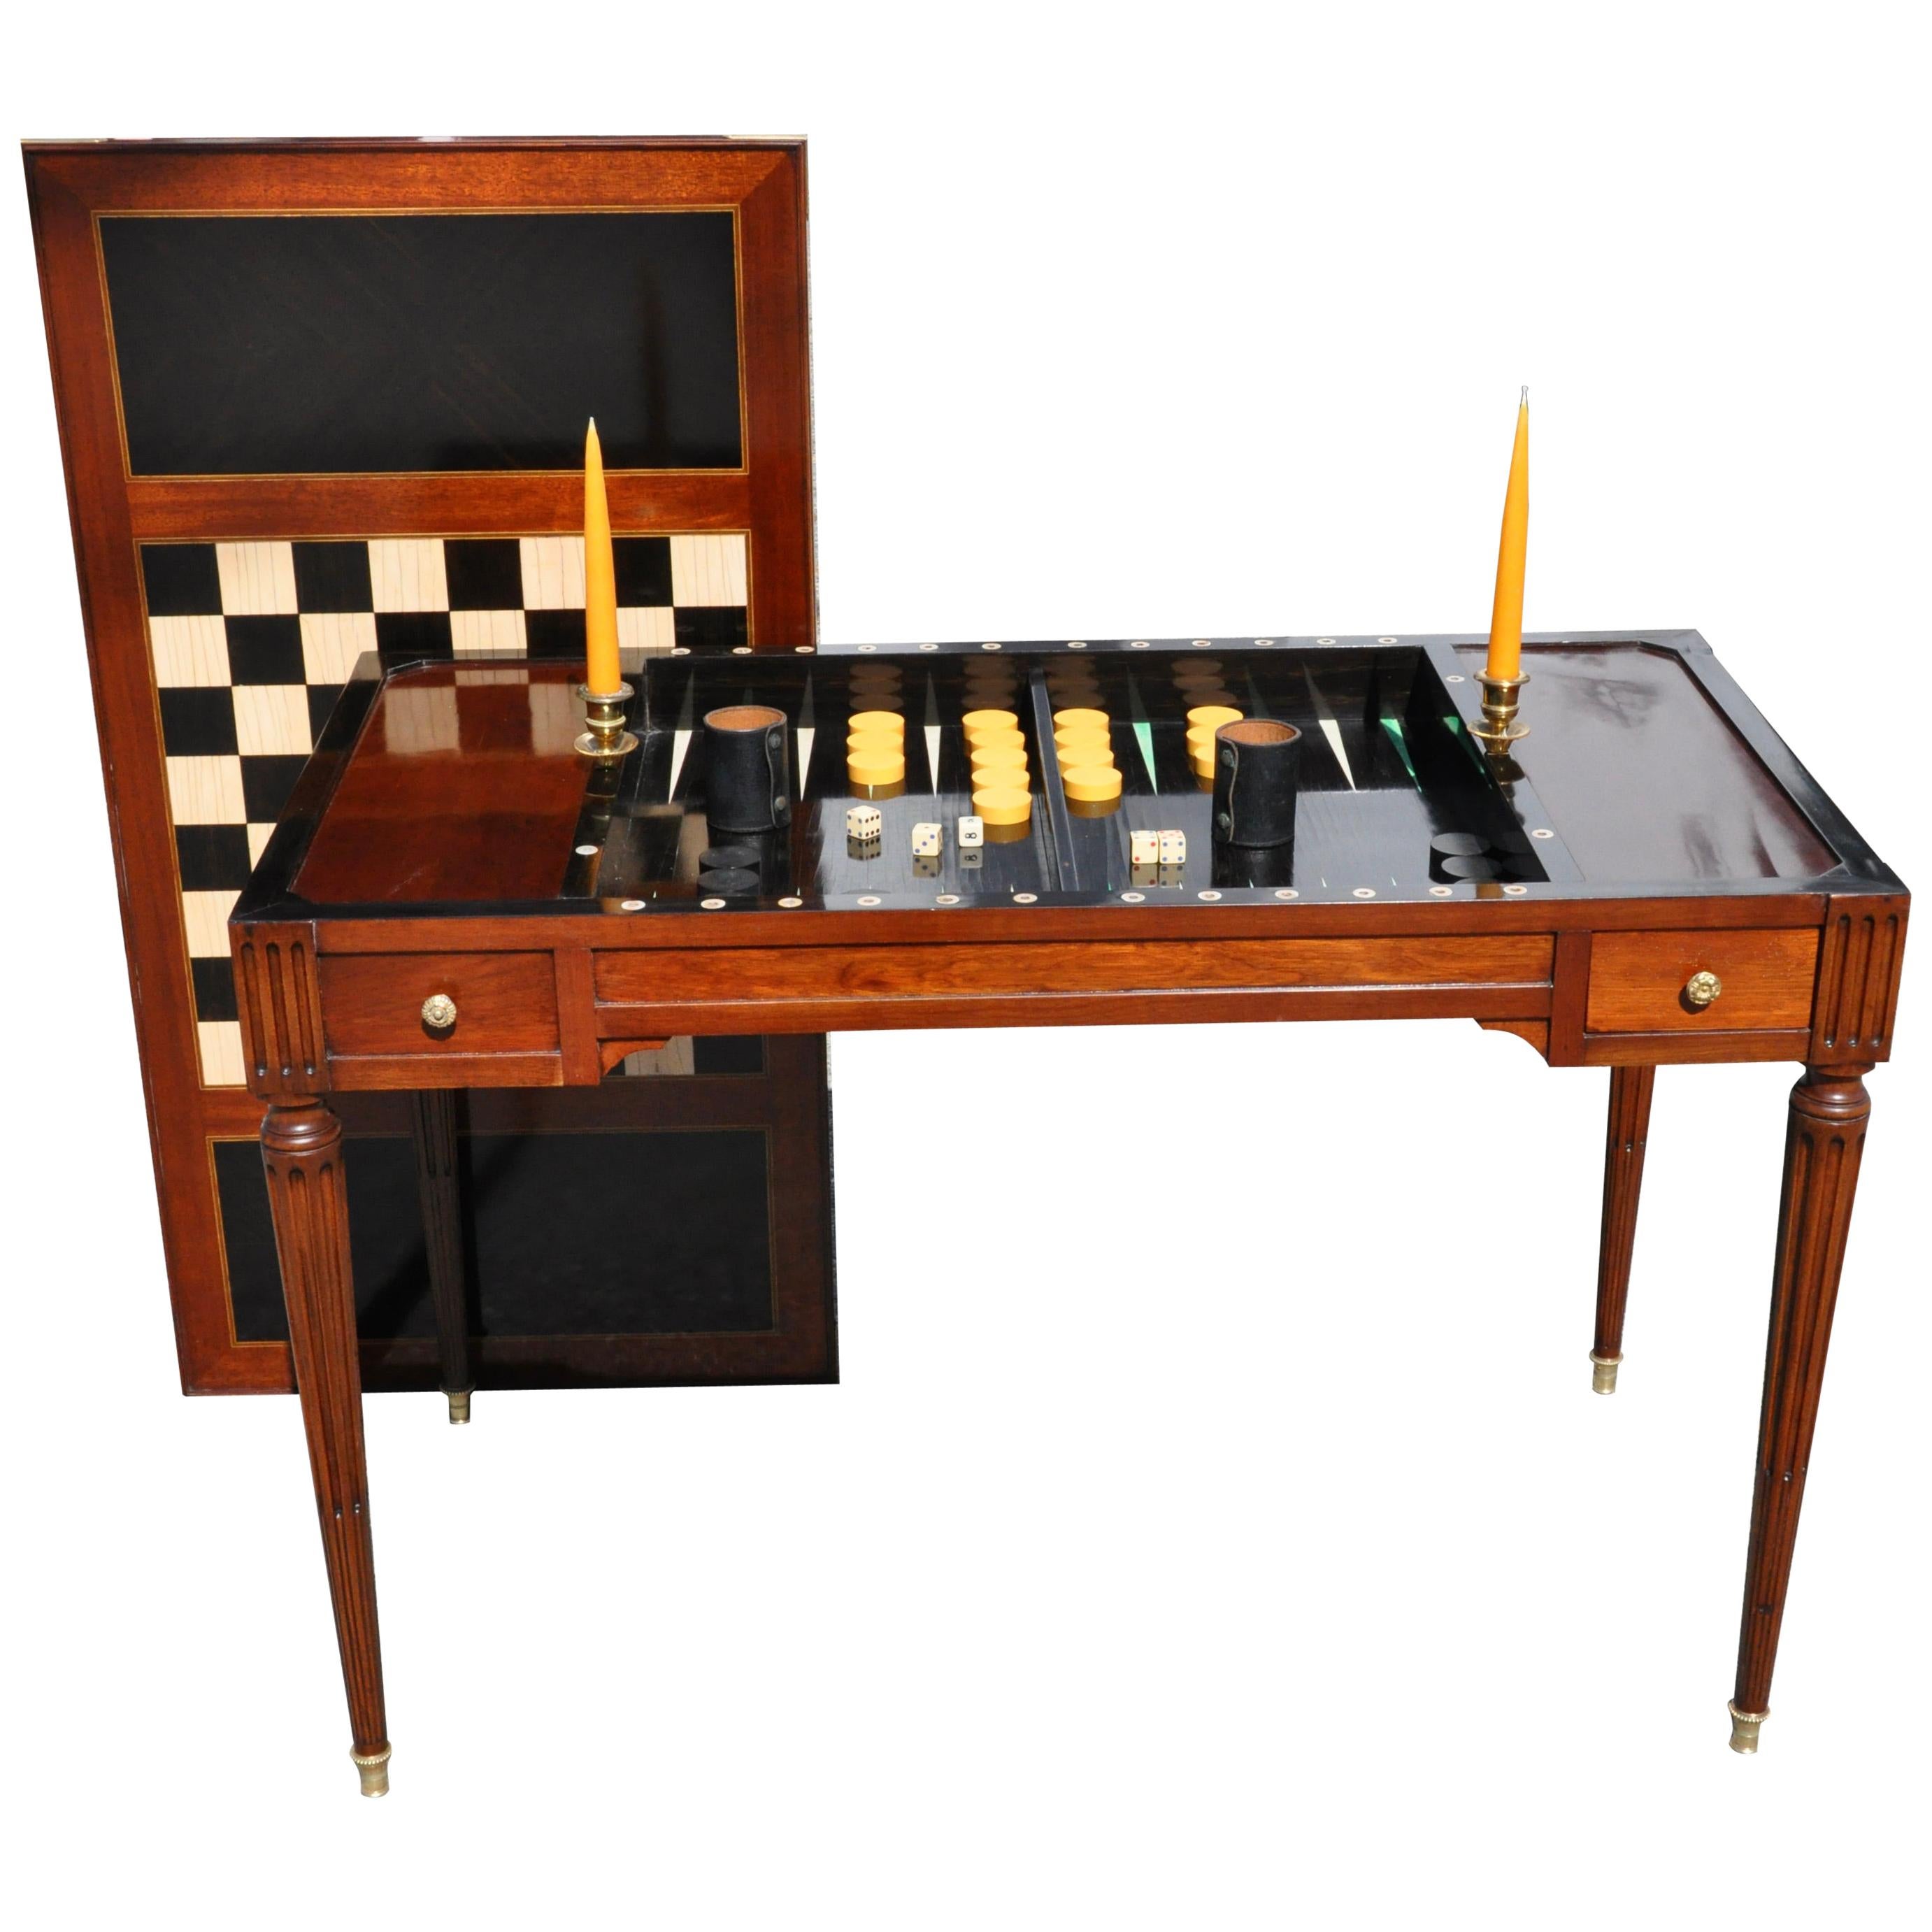 19th Century French Mahogany Tric Trac or Backgammon Table